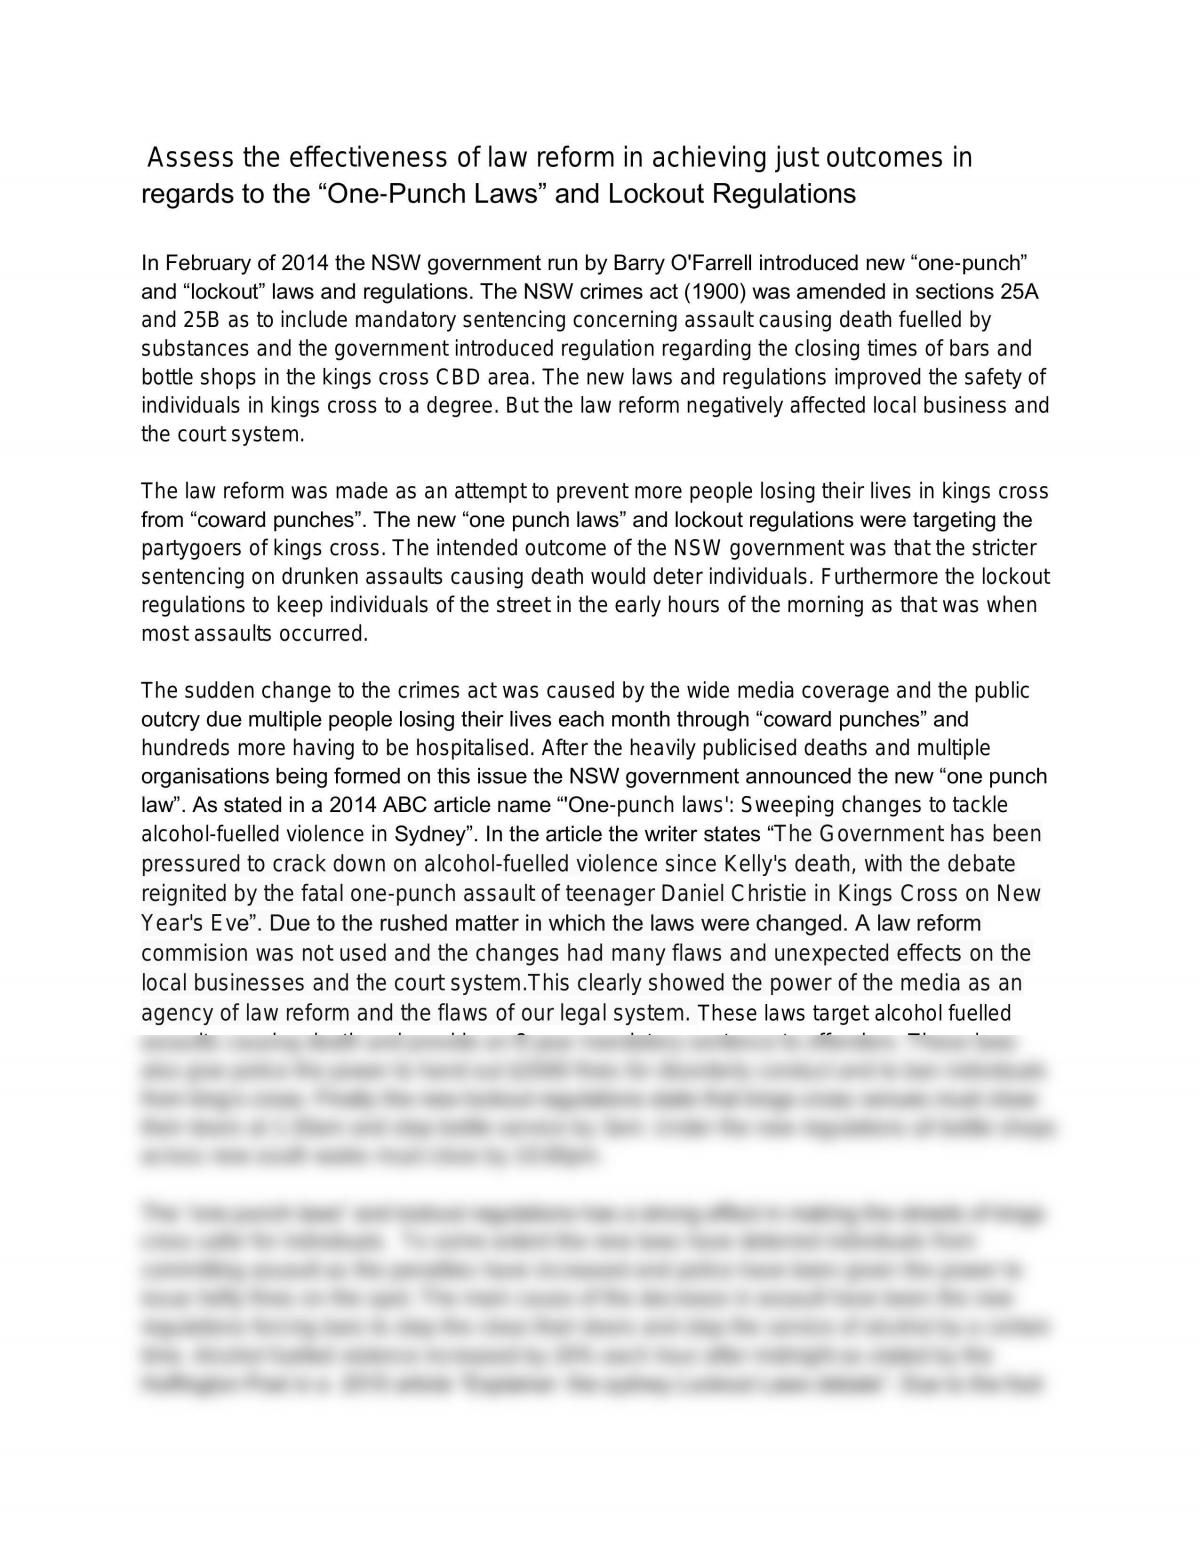 law reform essay example